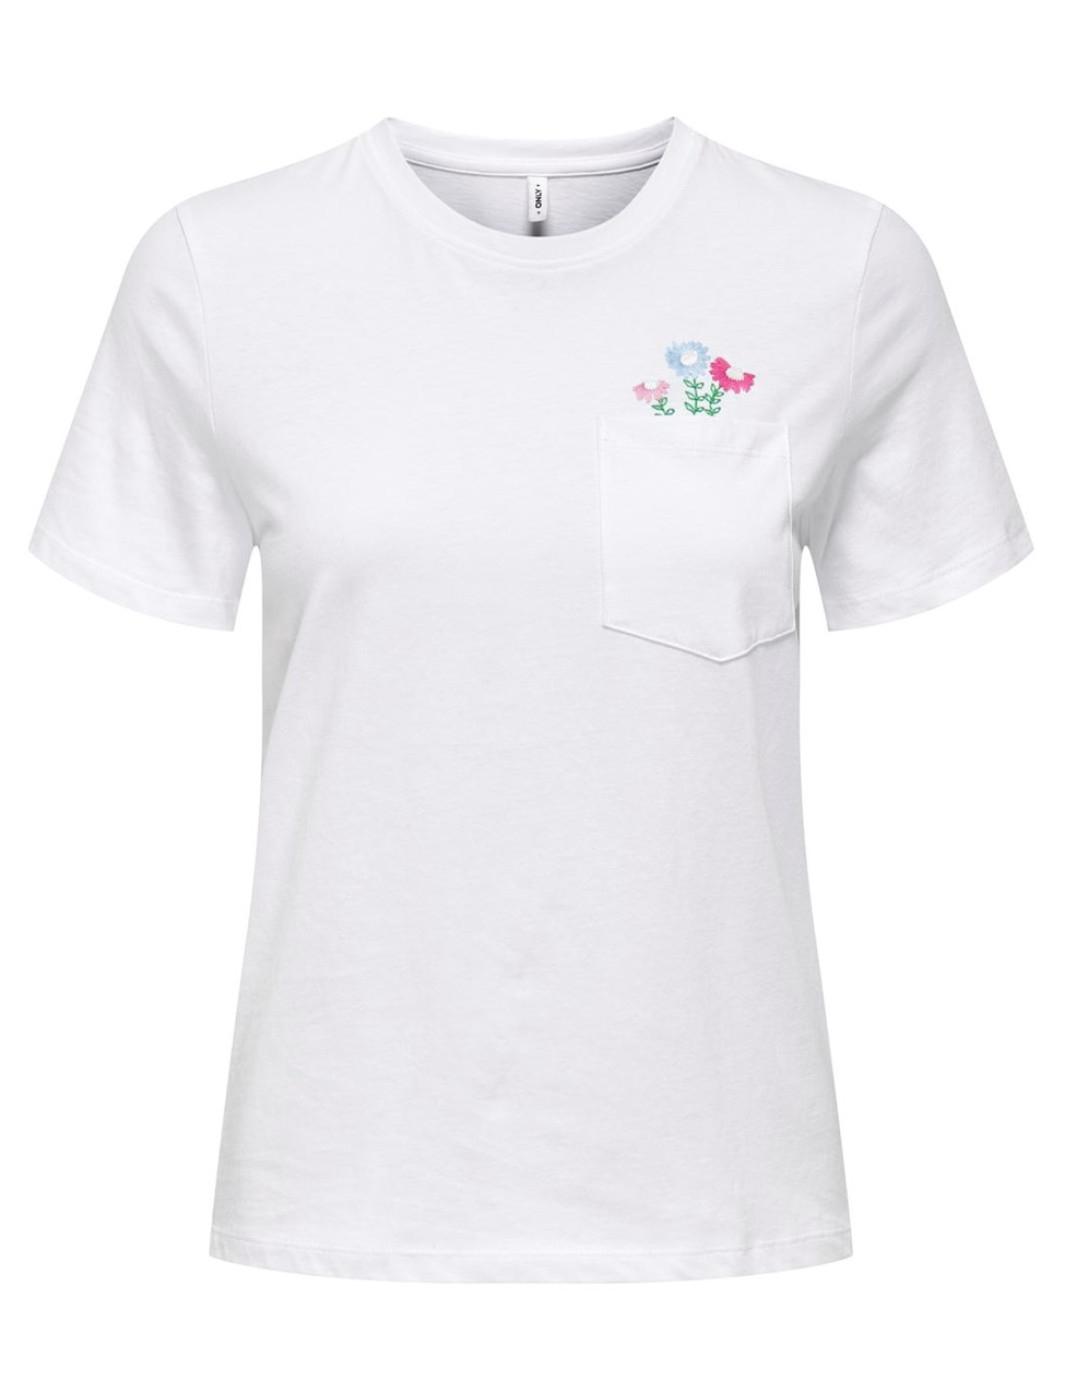 Camiseta Only Polly blanco holgada manga corta para mujer